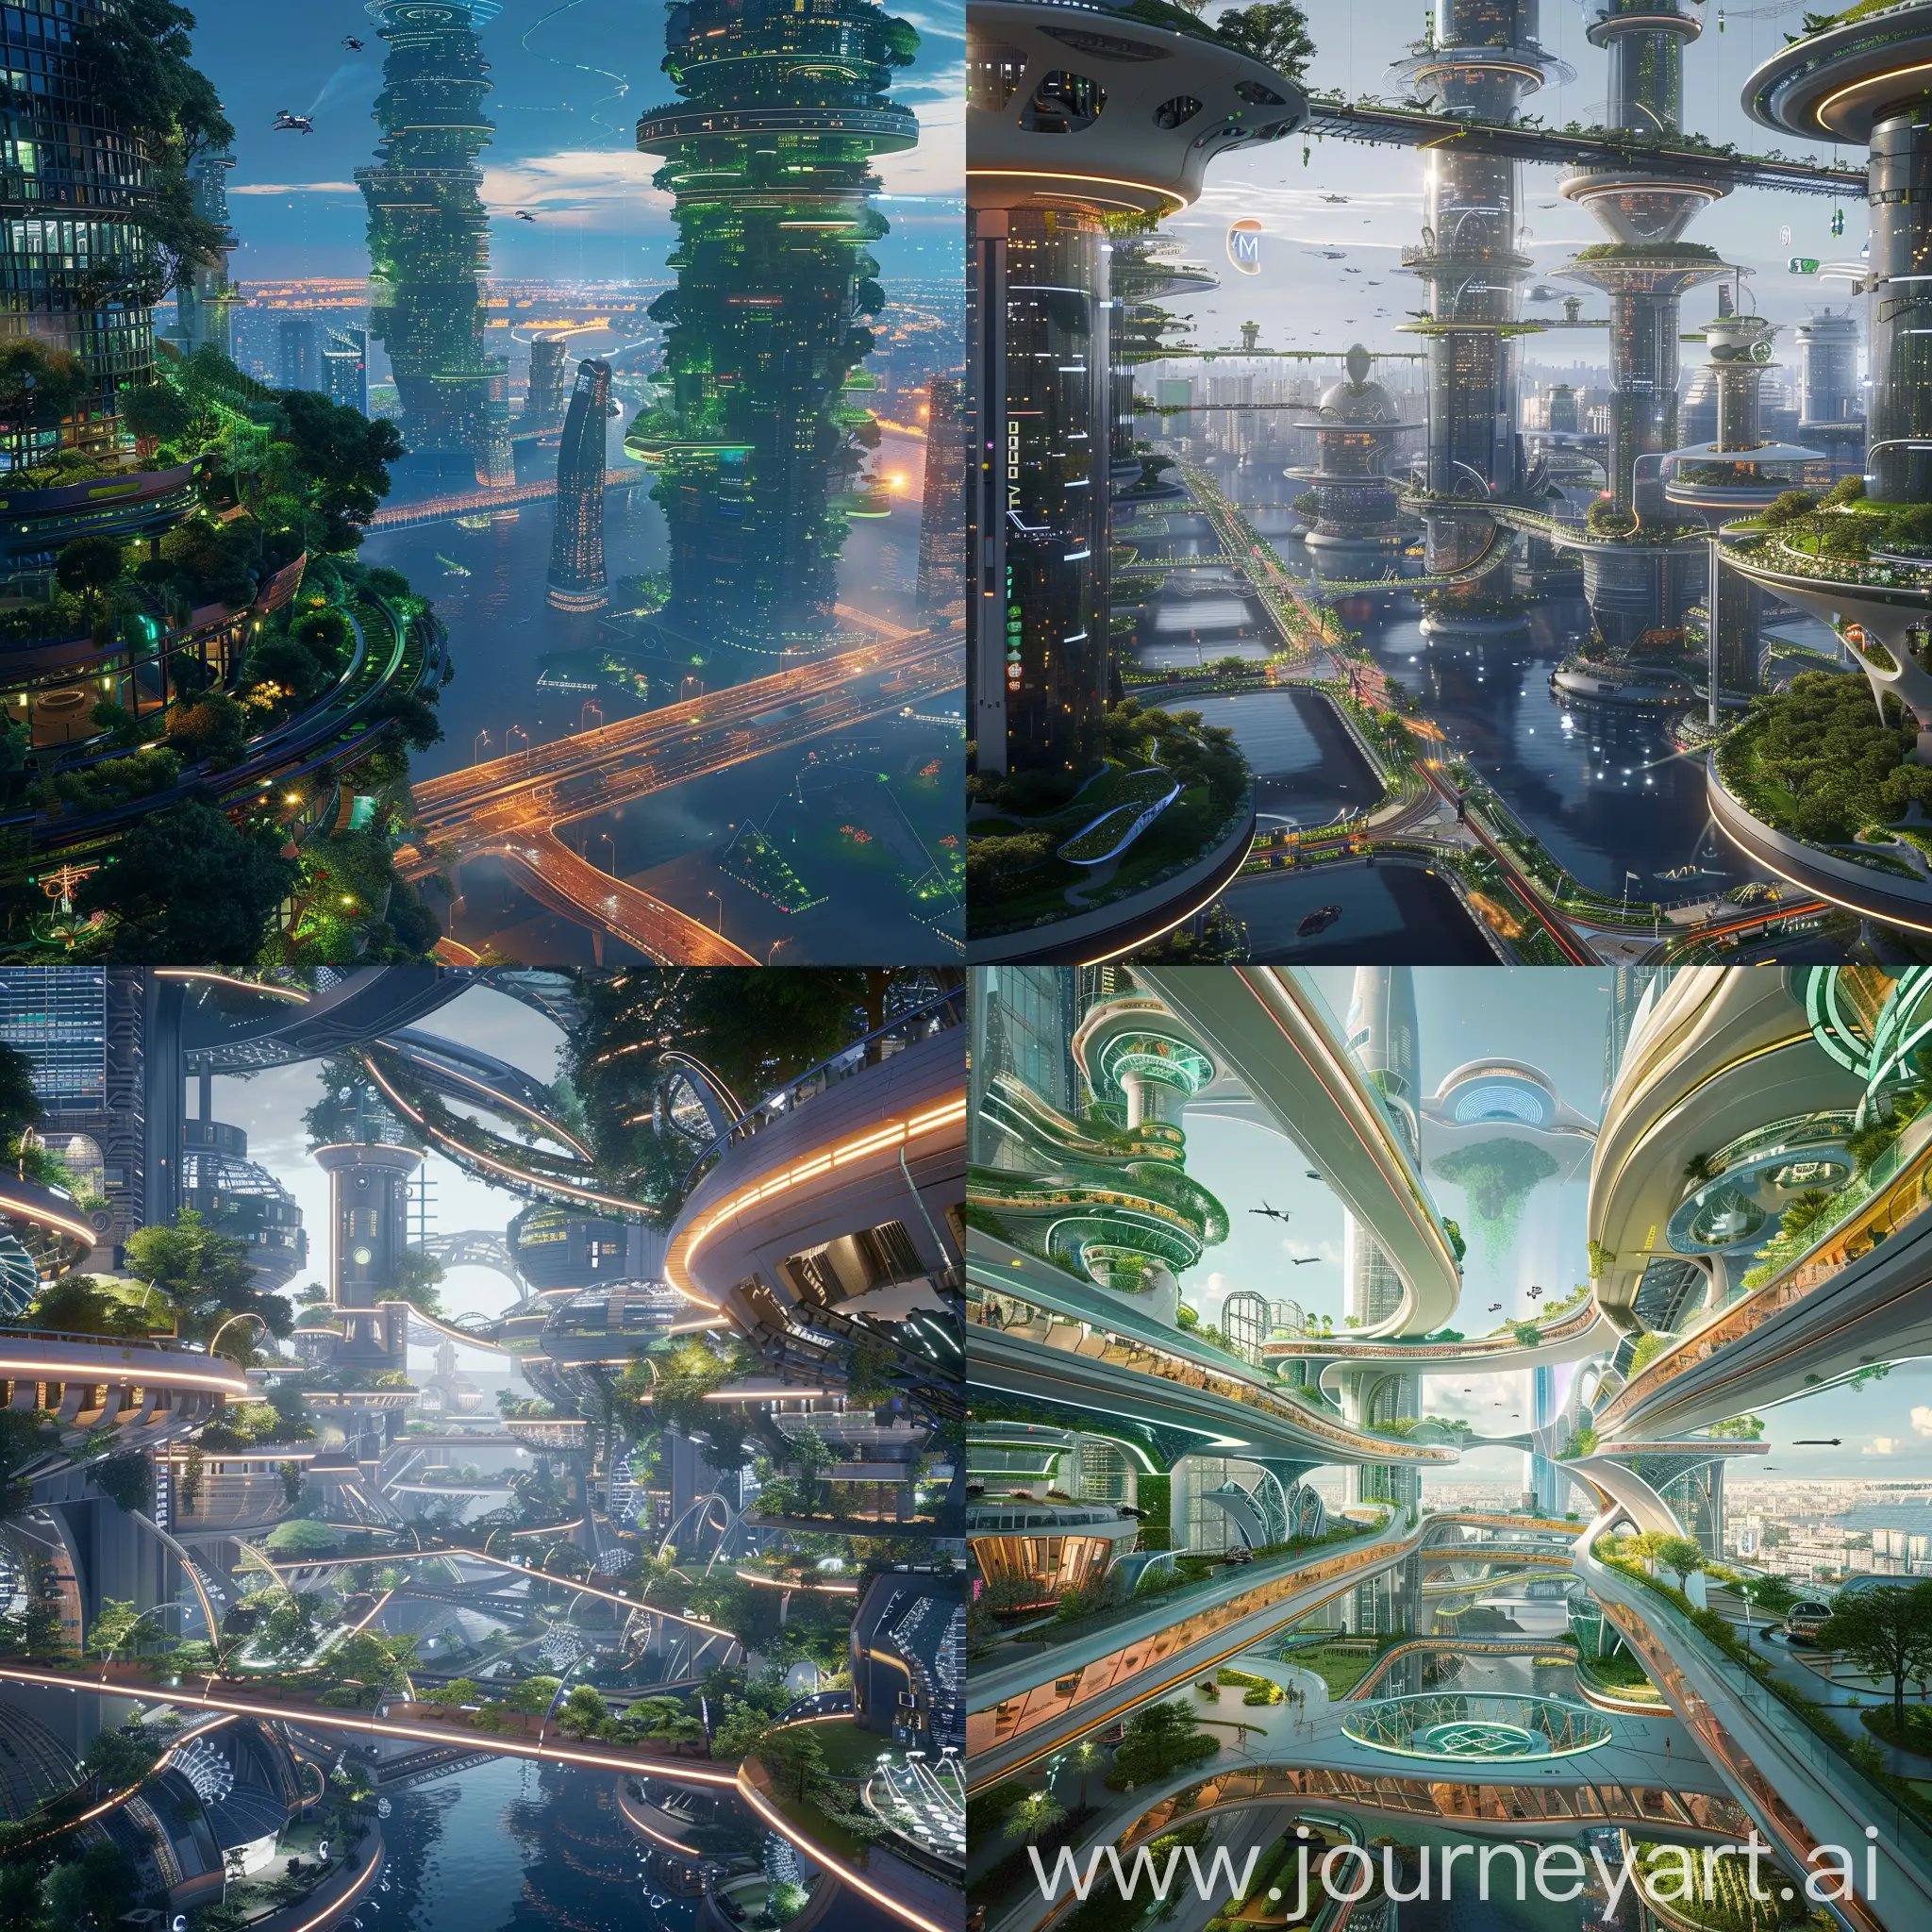 Futuristic-Vladivostok-Vertical-Bioponic-Farms-HighTech-Urban-Innovations